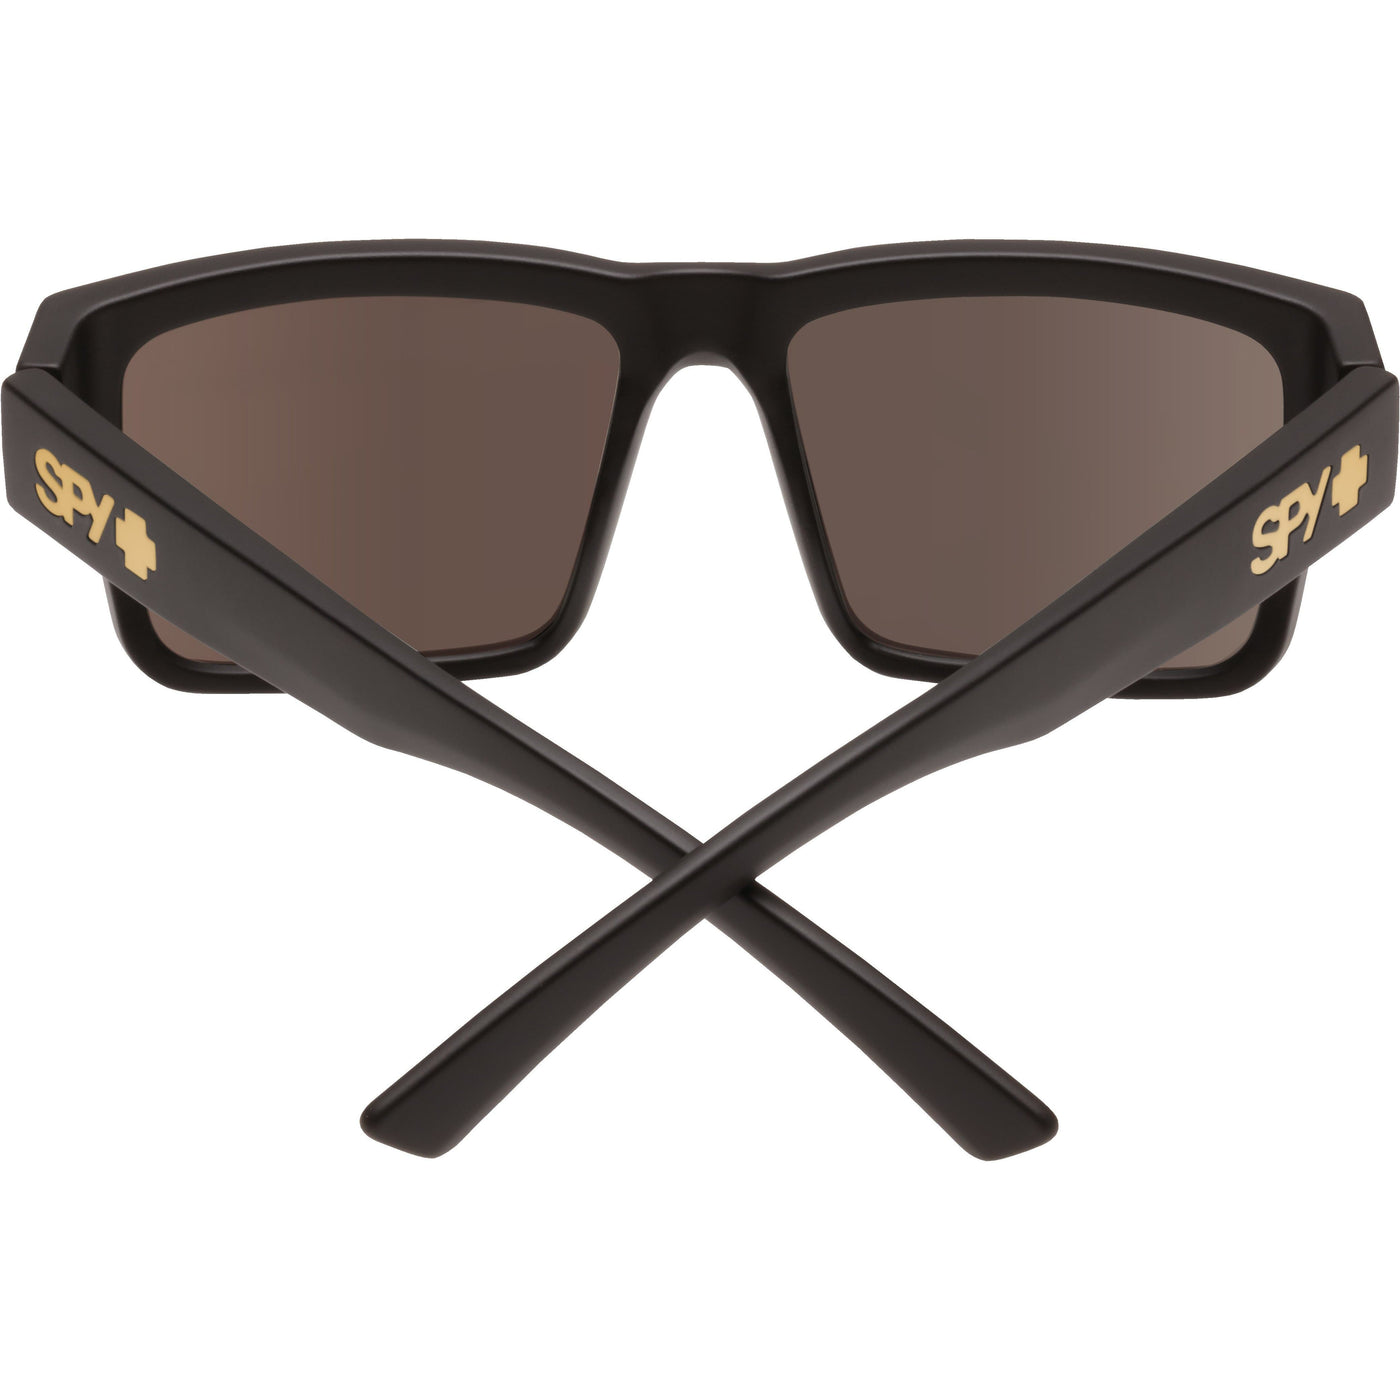 SPY MONTANA Sunglasses, Happy Lens - Gold 8Lines Shop - Fast Shipping